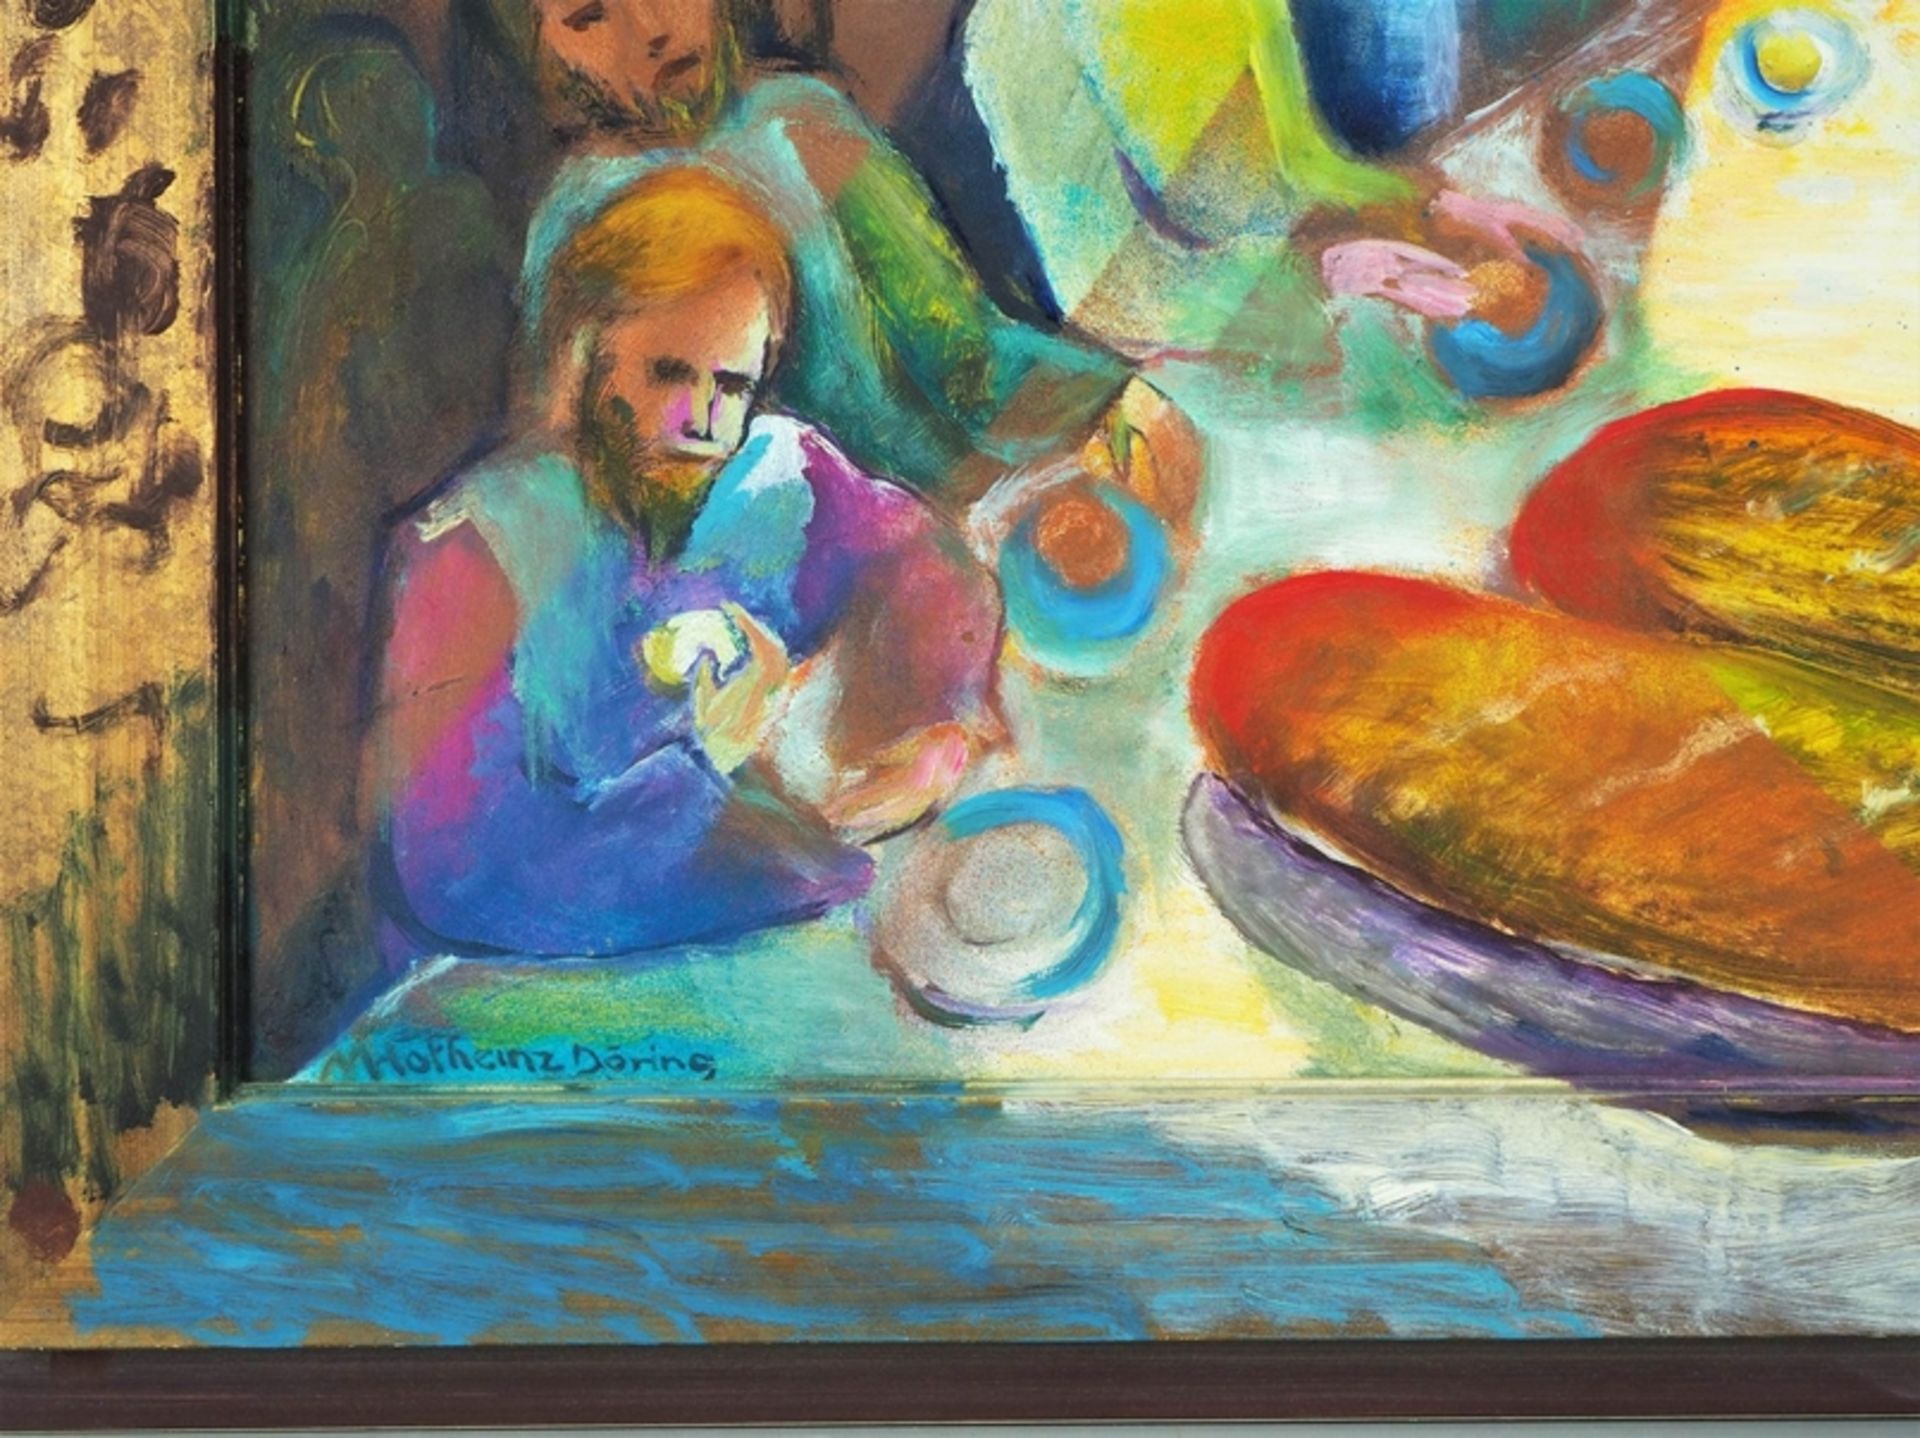 Margret Hofheinz-Döring (1910, Mainz - 1994, Bad Boll) - Last Supper, 1978 - Image 2 of 3